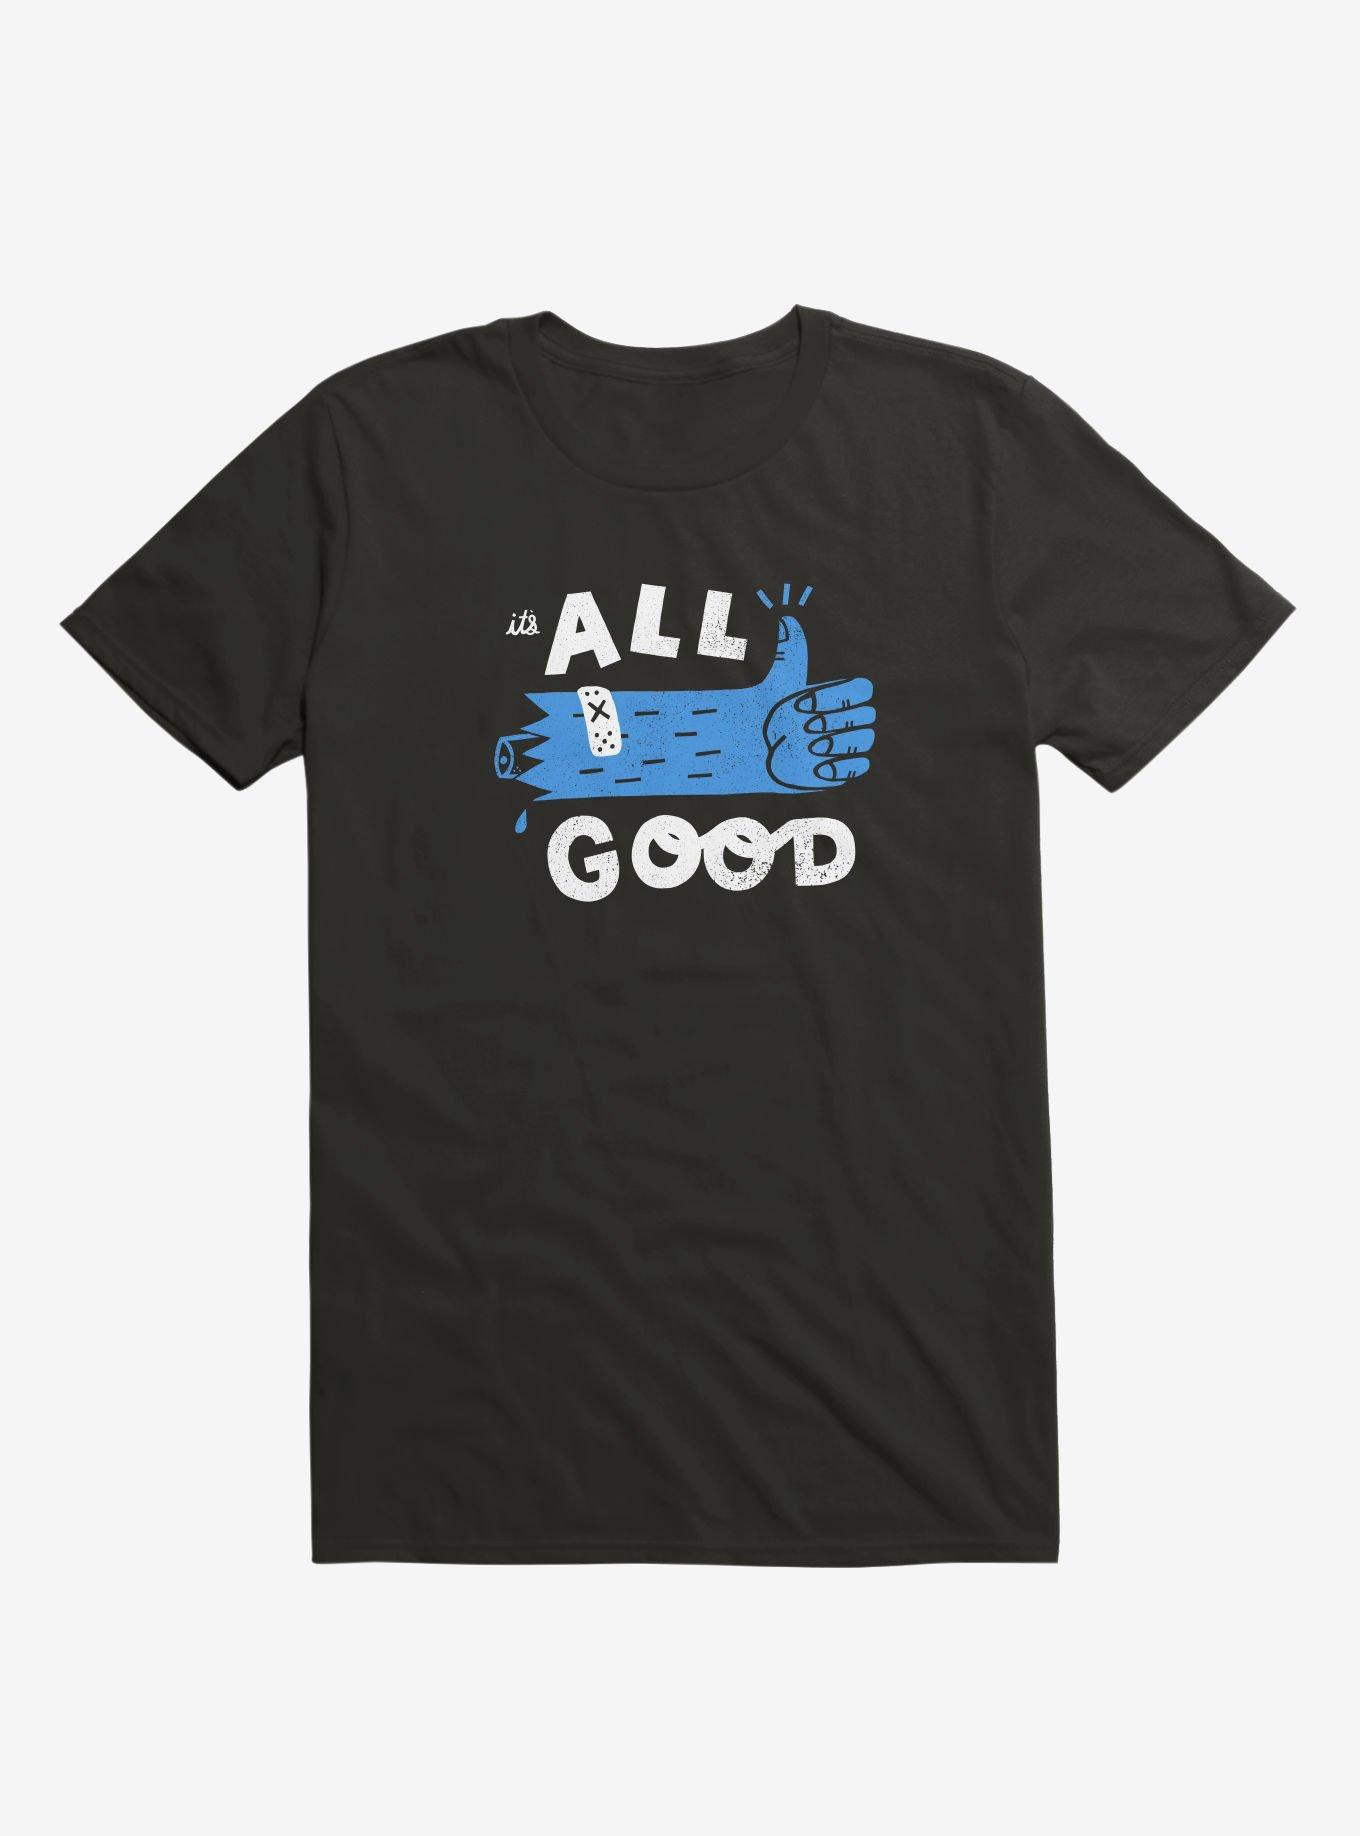 It's All Good T-Shirt